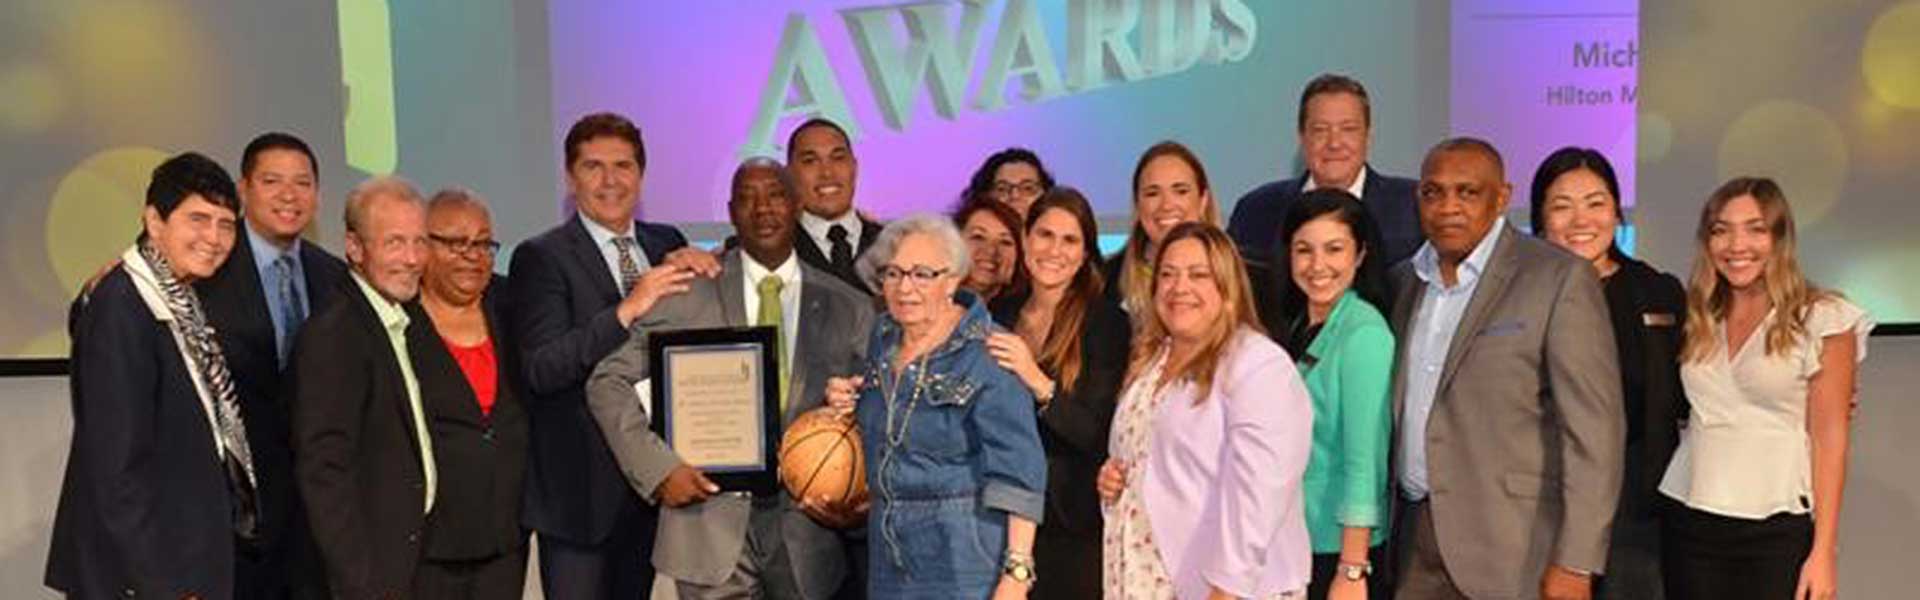 2019 Inn Key Award Winner Hilton Miami Downtown